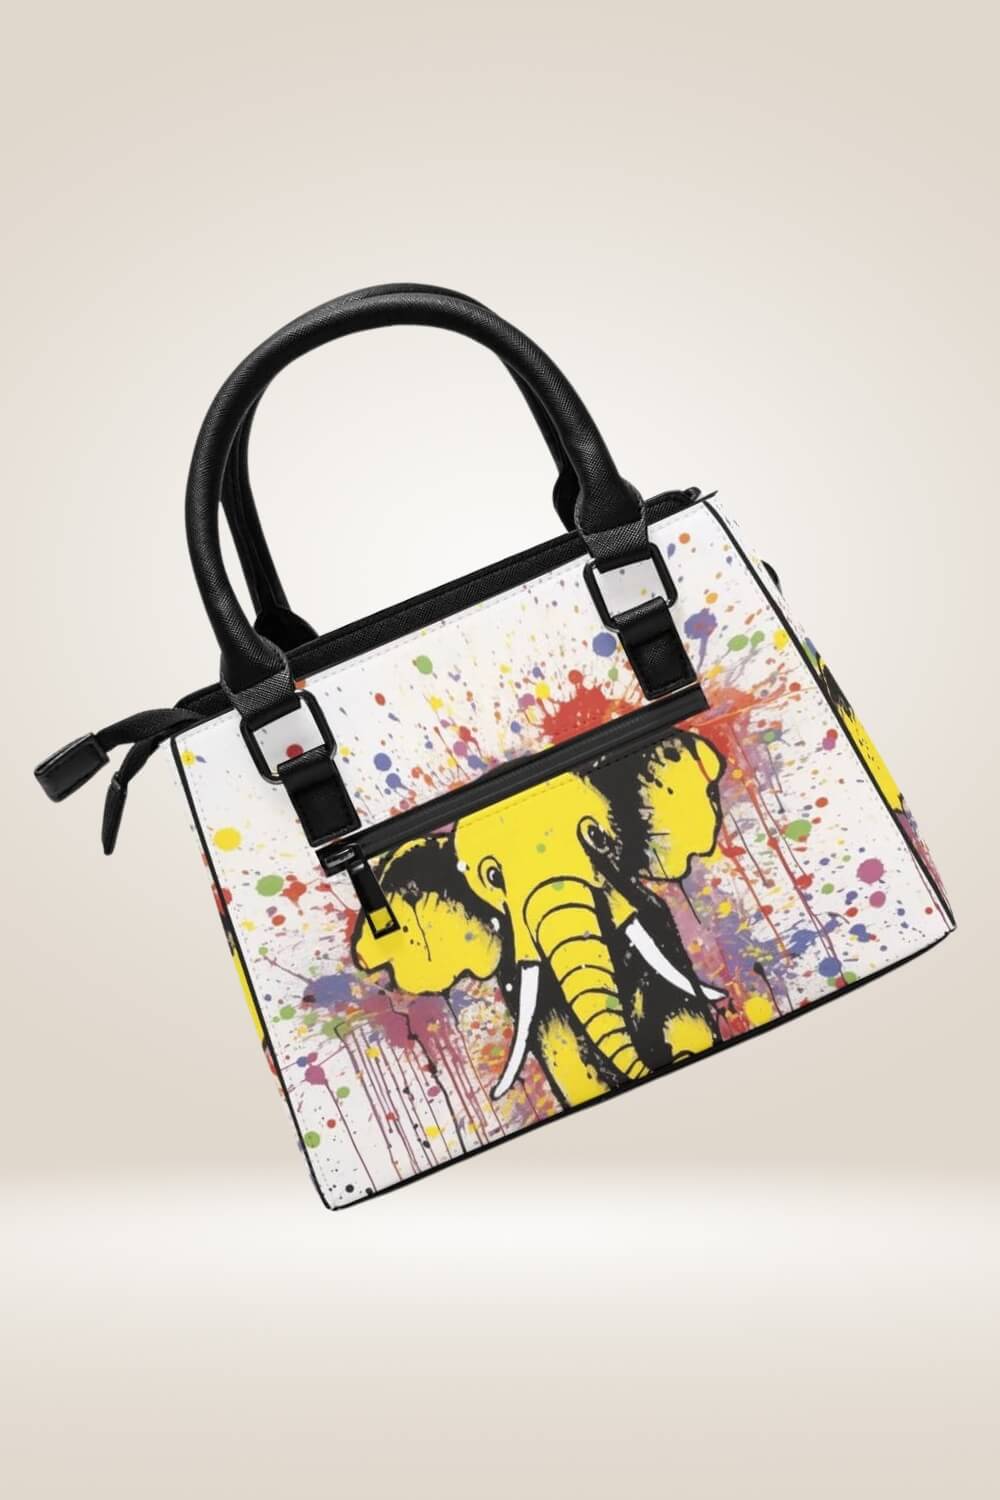 Cartoon Yellow Elephant Satchel Bag - TGC Boutique - Satchel Handbag